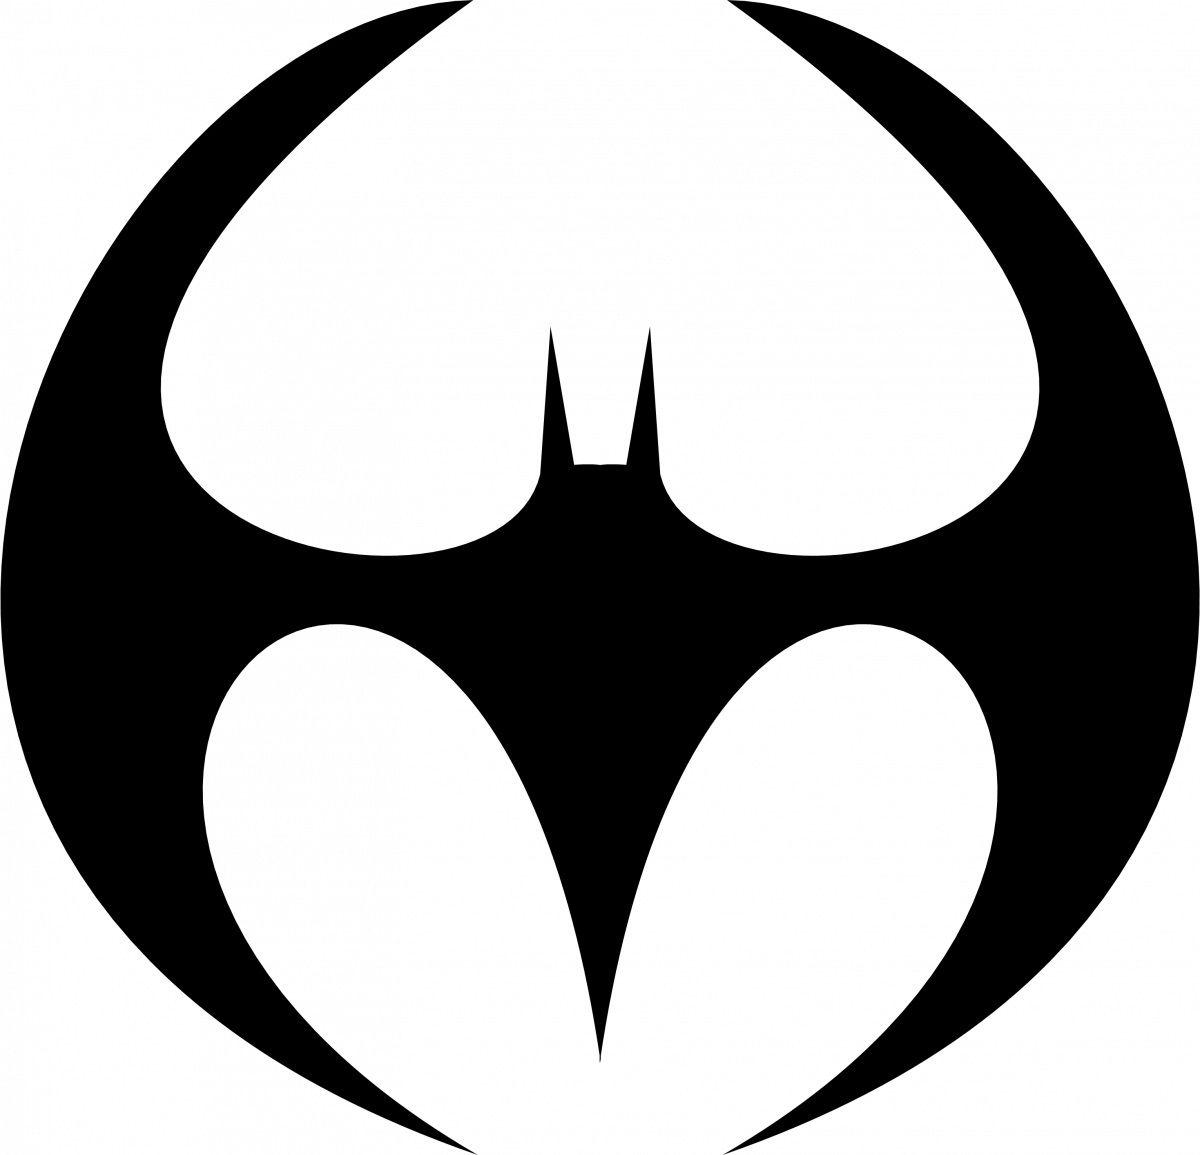 Batman Symbol Logo - The incredible 75-year evolution of the Batman logo | Business Insider